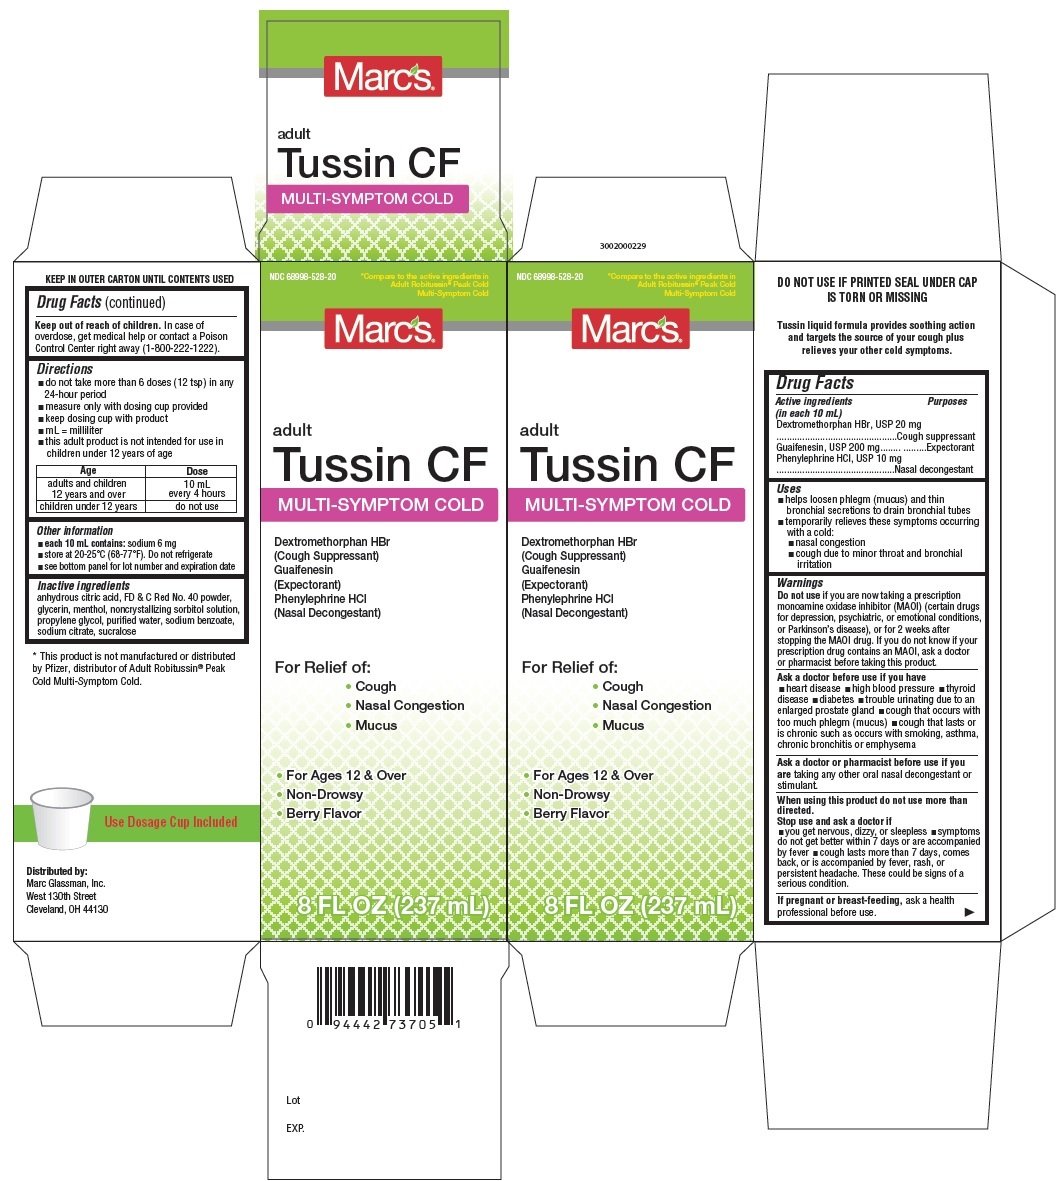 Adult Tussin Cf Multi-symptom Cold | Dextromethorphan Hbr, Guaifenesin, Phenylephrine Hcl Liquid while Breastfeeding